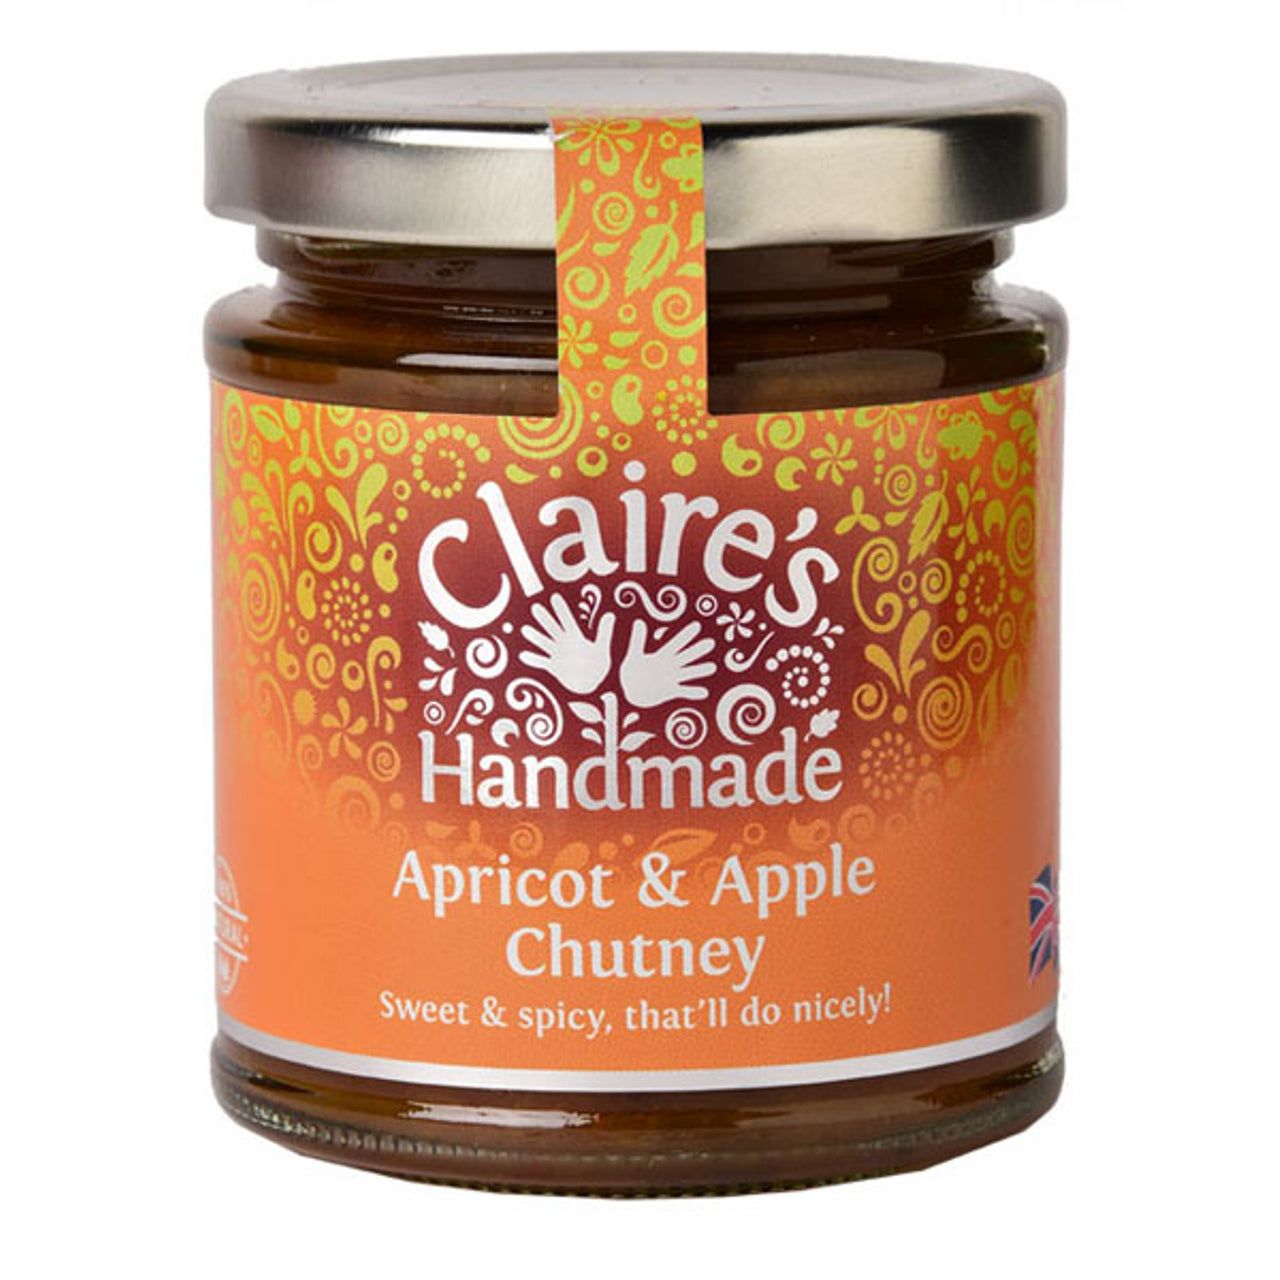 Claire's Handmade Apricot & Apple Chutney 200g